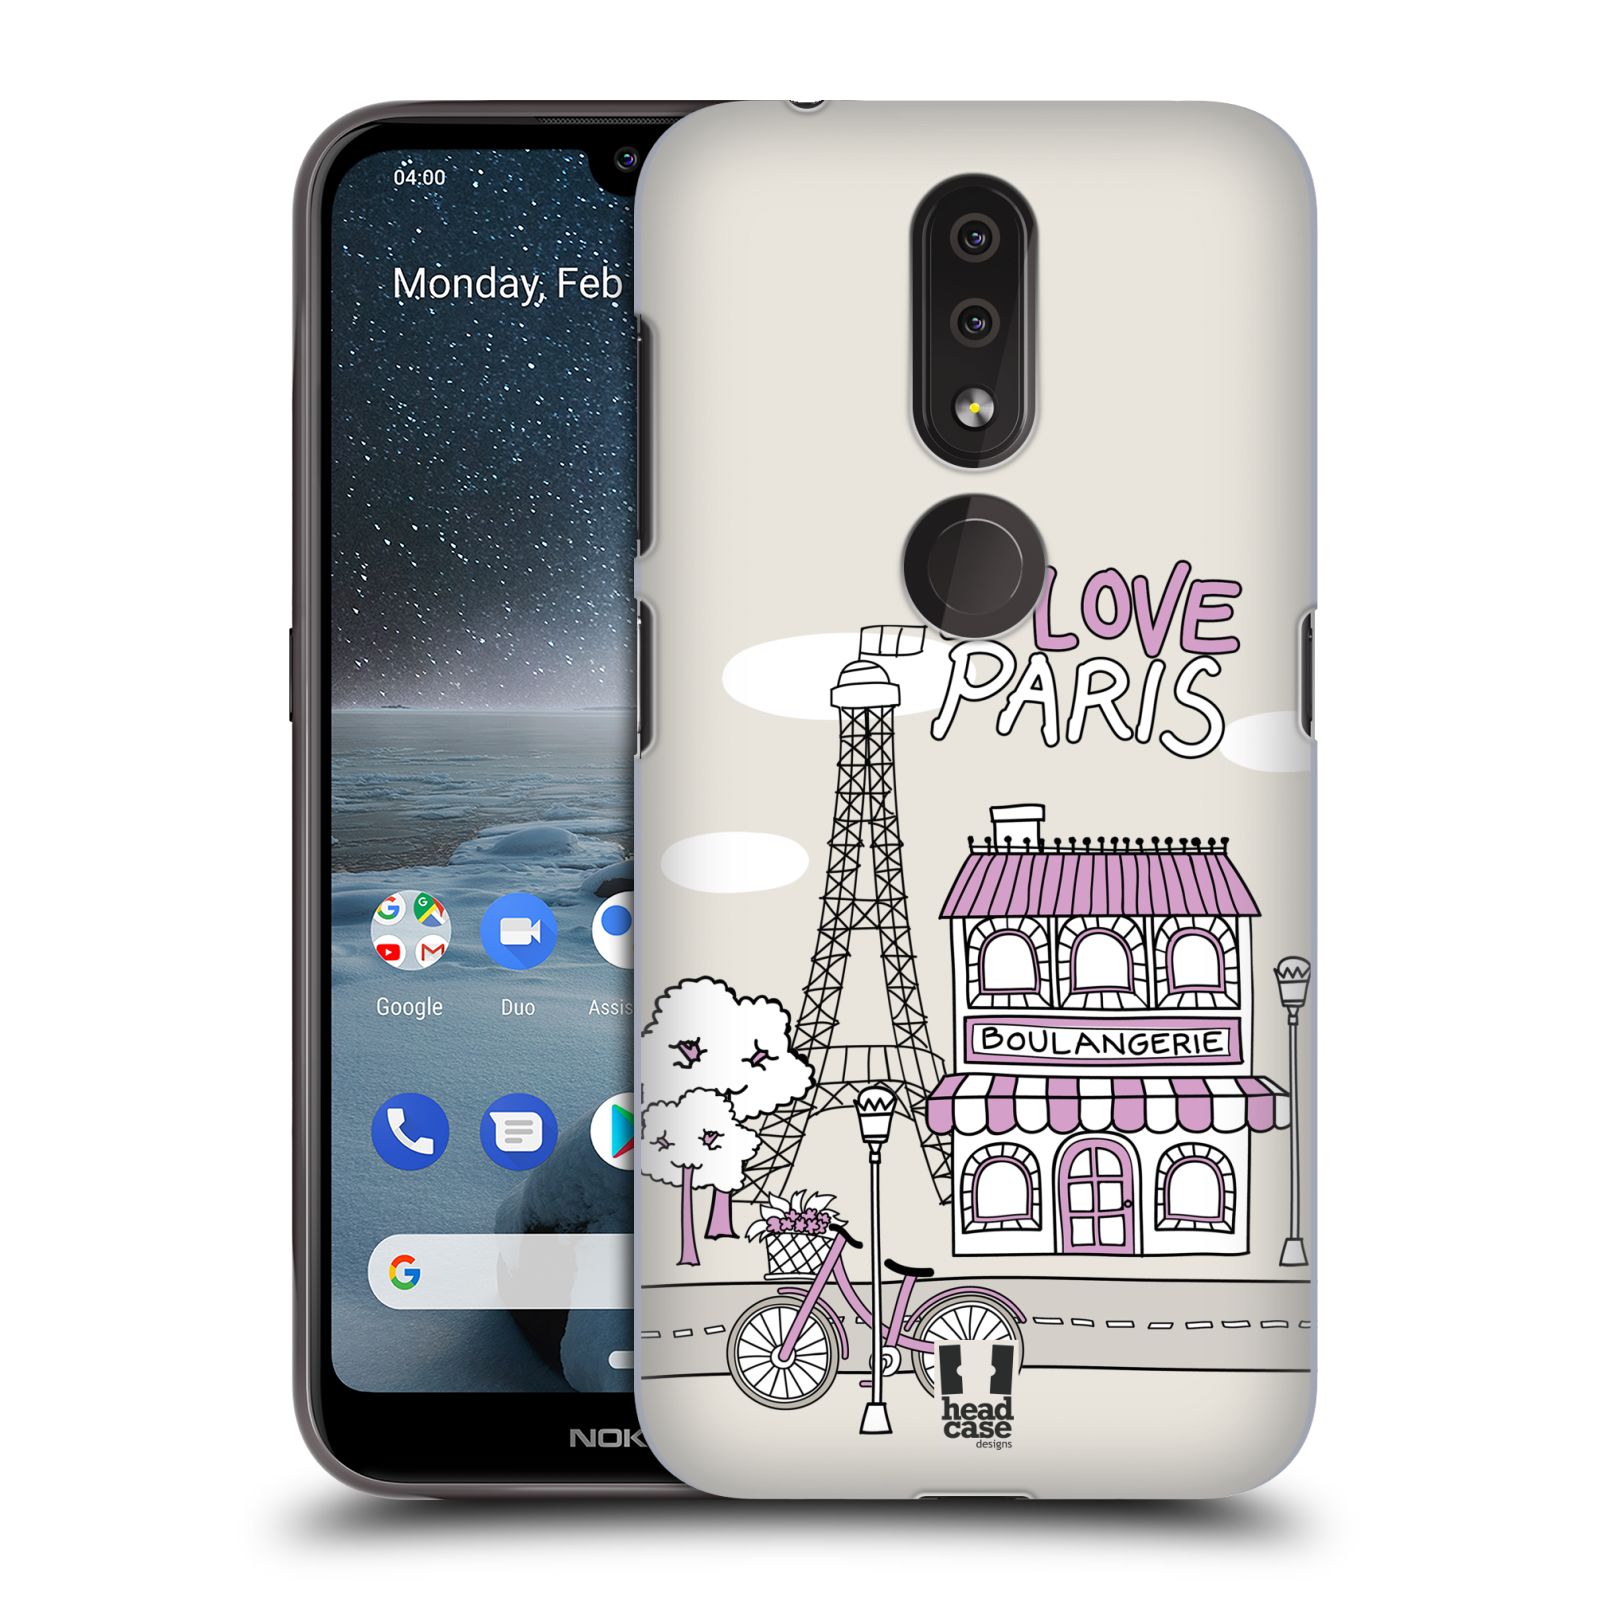 Pouzdro na mobil Nokia 4.2 - HEAD CASE - vzor Kreslená městečka FIALOVÁ, Paříž, Francie, I LOVE PARIS